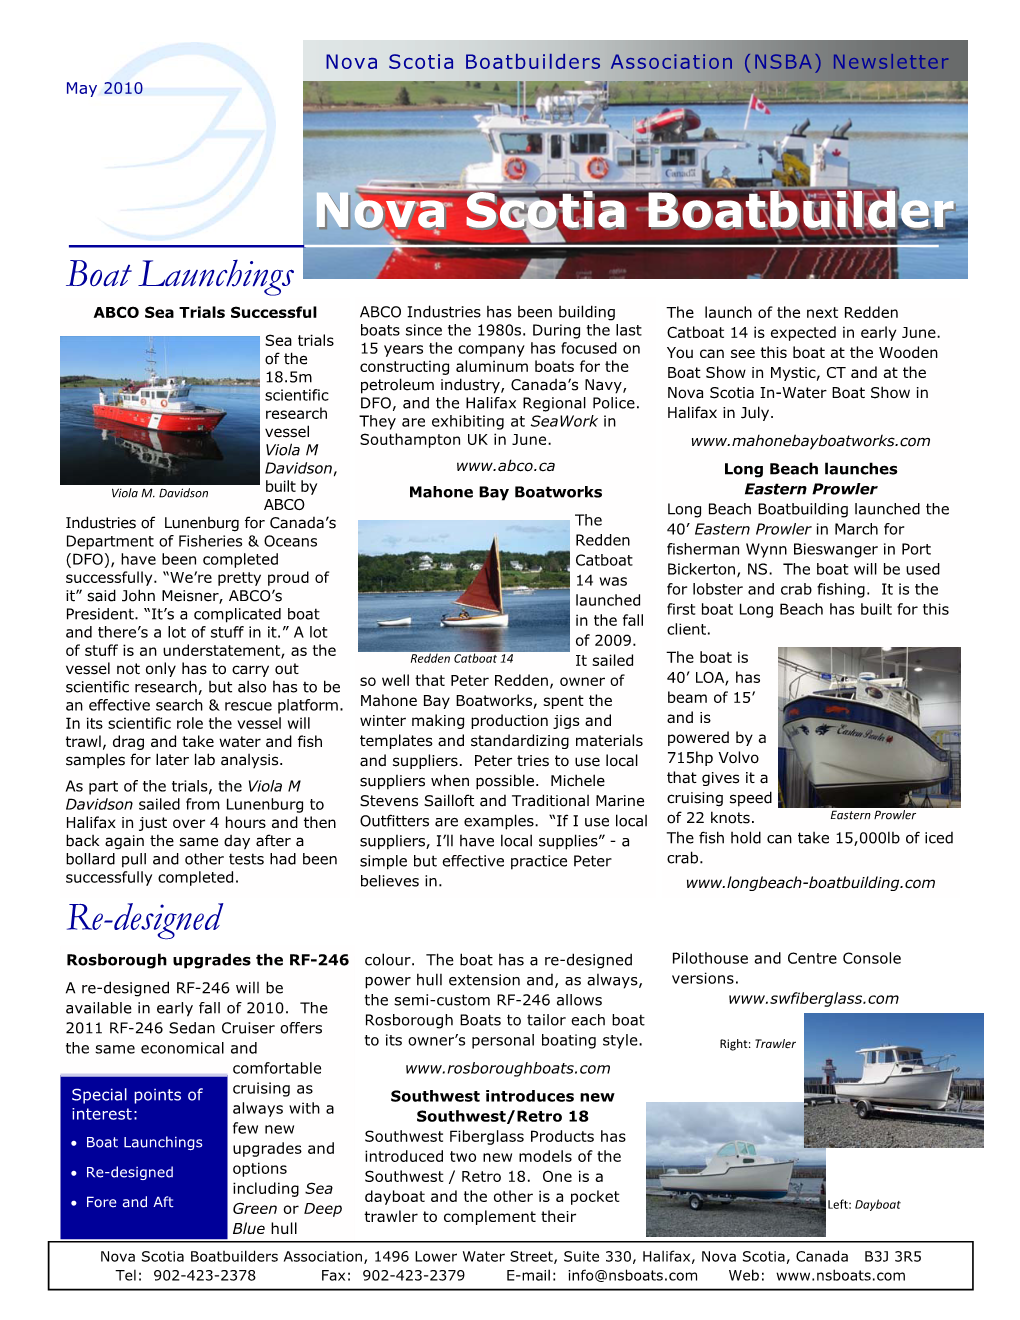 Nova Scotia Boatbuilders Association (NSBA) Newsletter May 2010